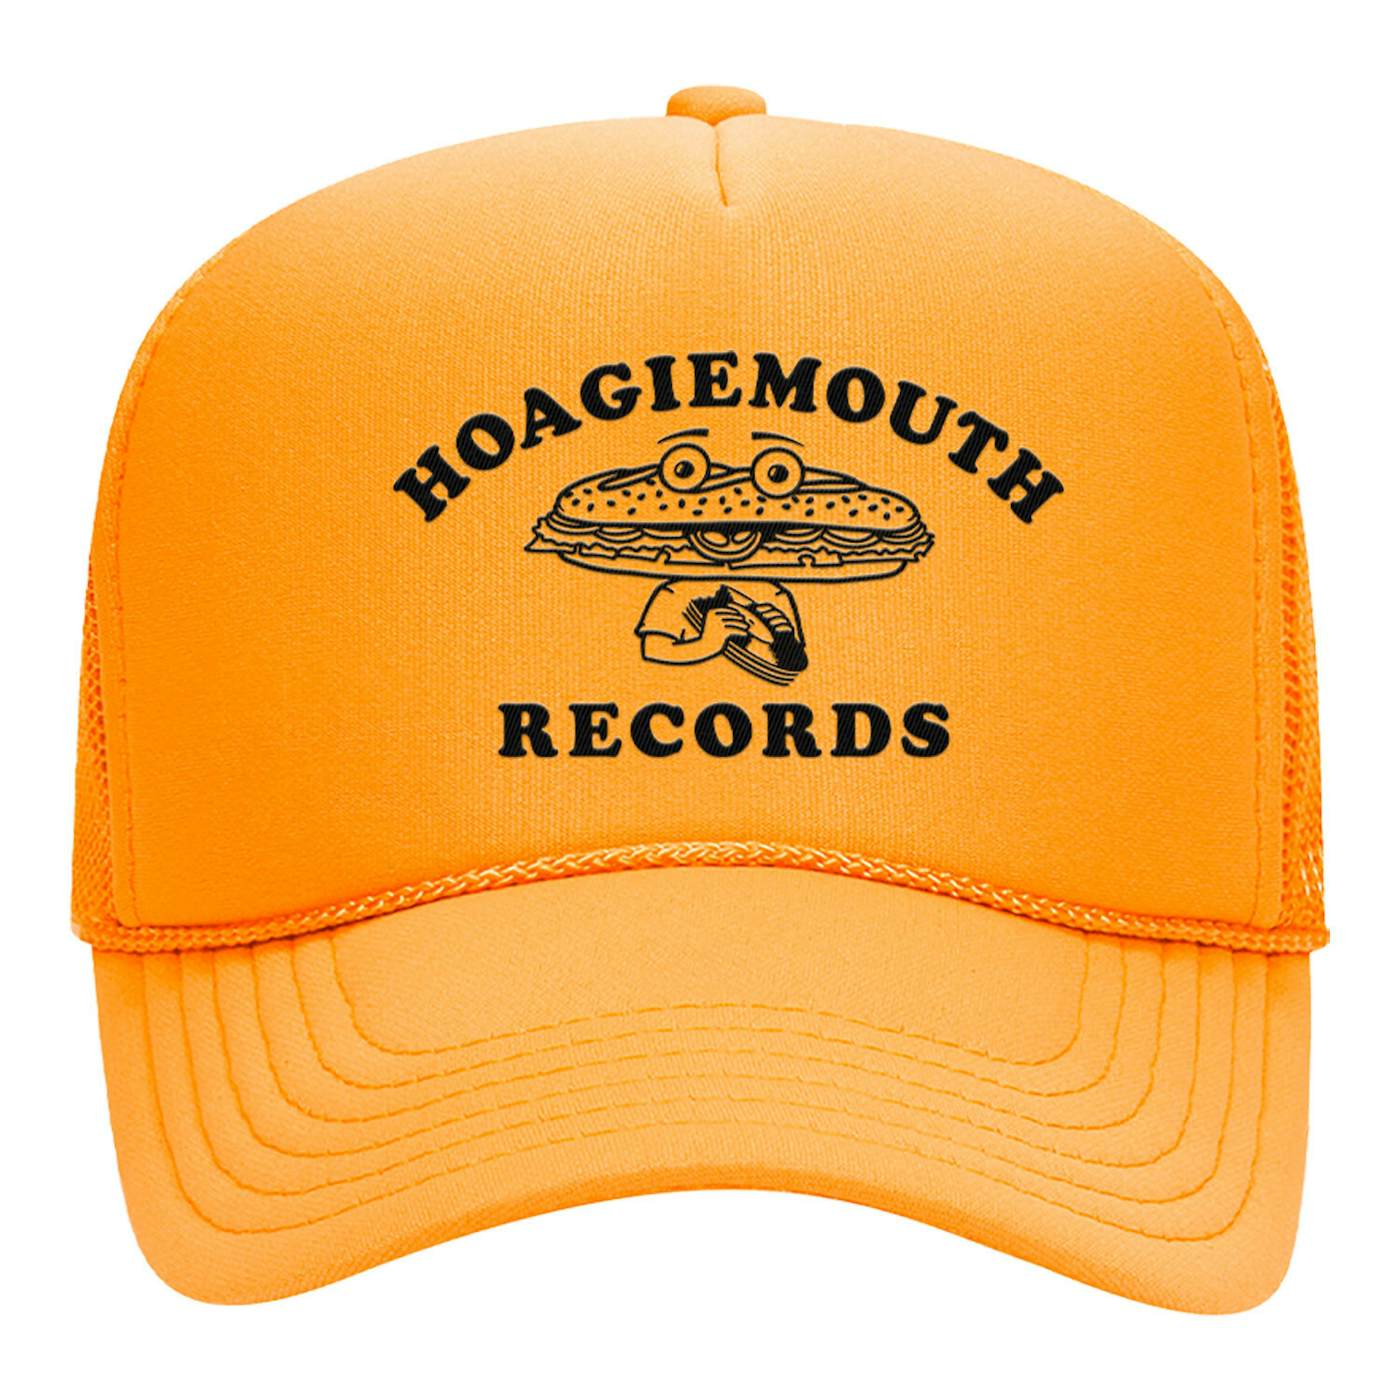 Amos Lee Hoagiemouth Records Yellow Trucker Cap